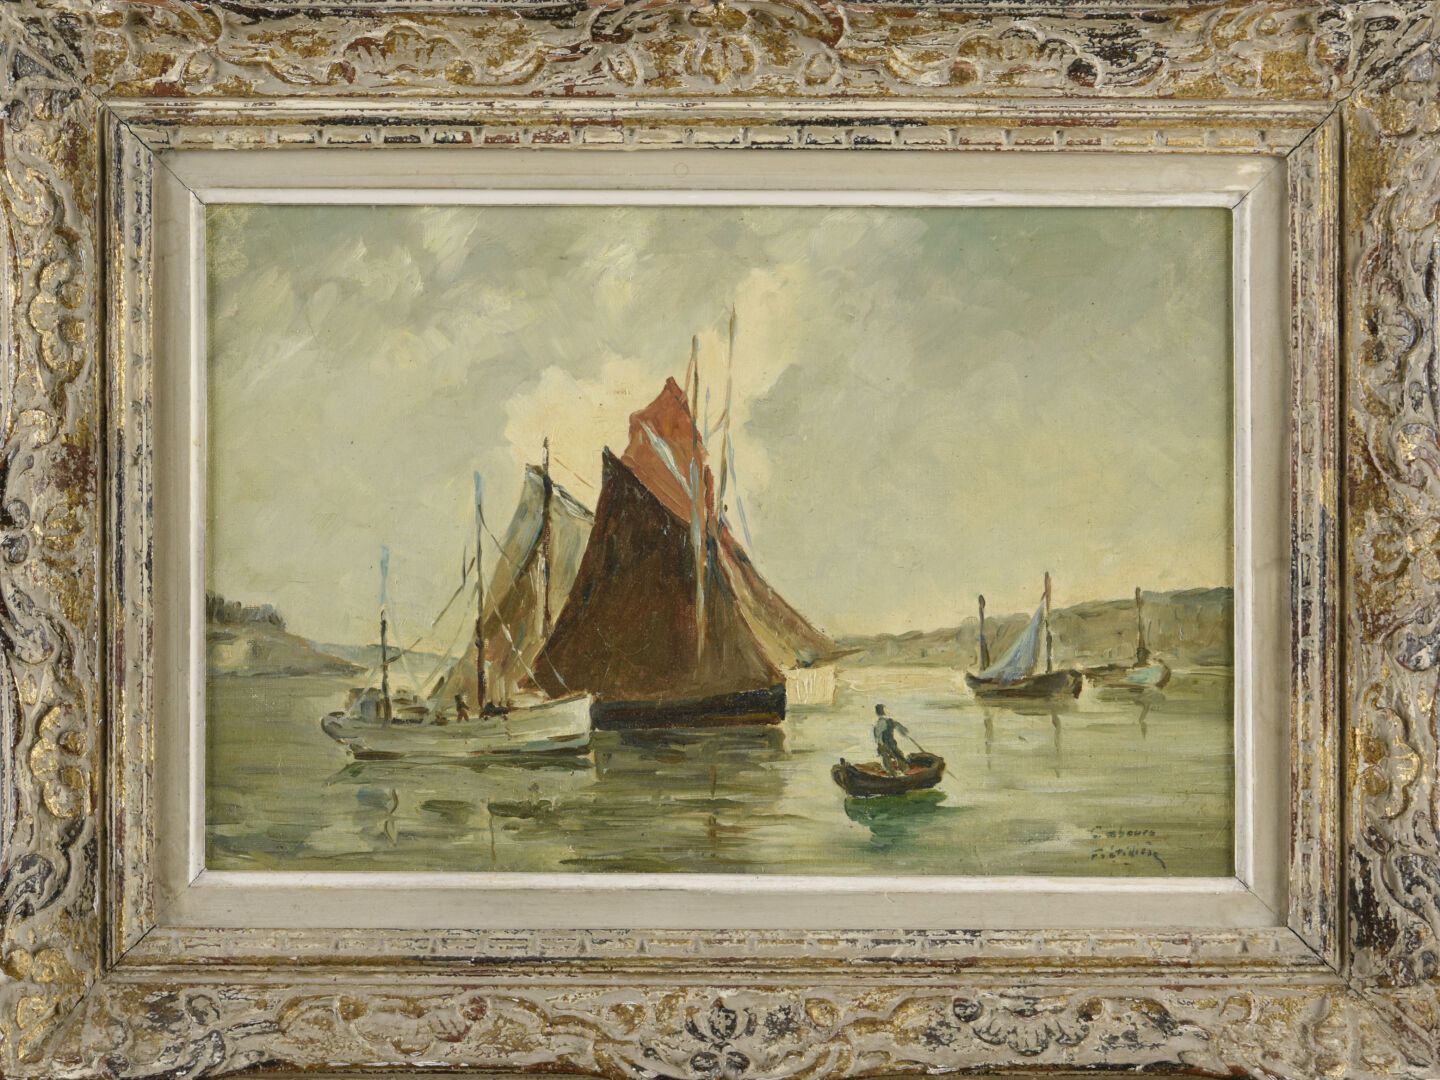 Null 亨利-莫里斯-卡霍斯（1889-1974年）
海事
布面油画
右下方有签名